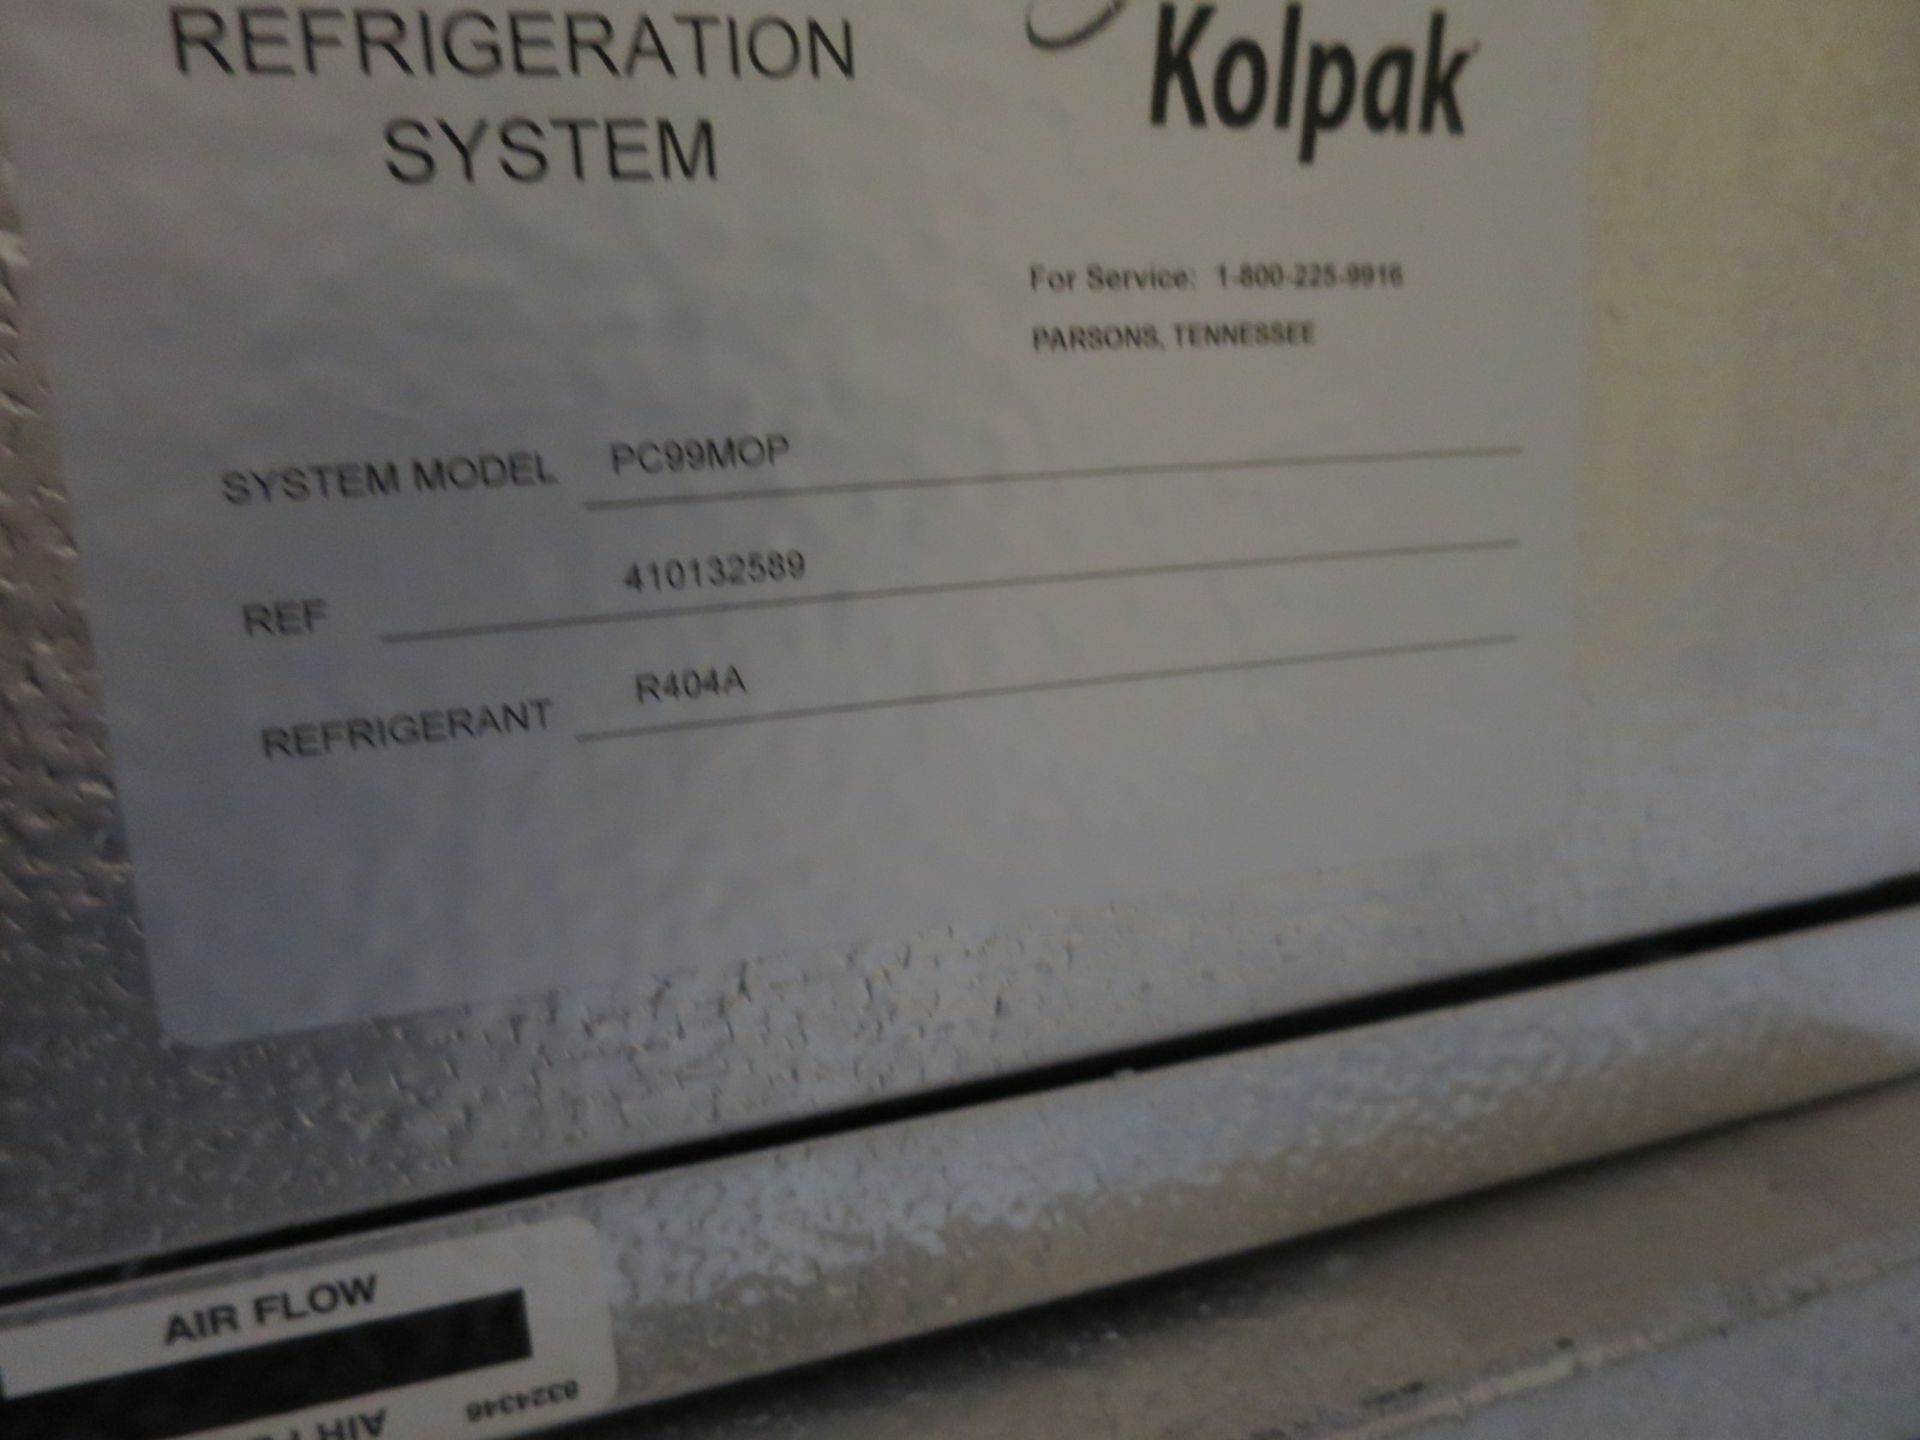 Kolpak Walk in Cooler Model PC99MOP with enclosure - Image 2 of 4